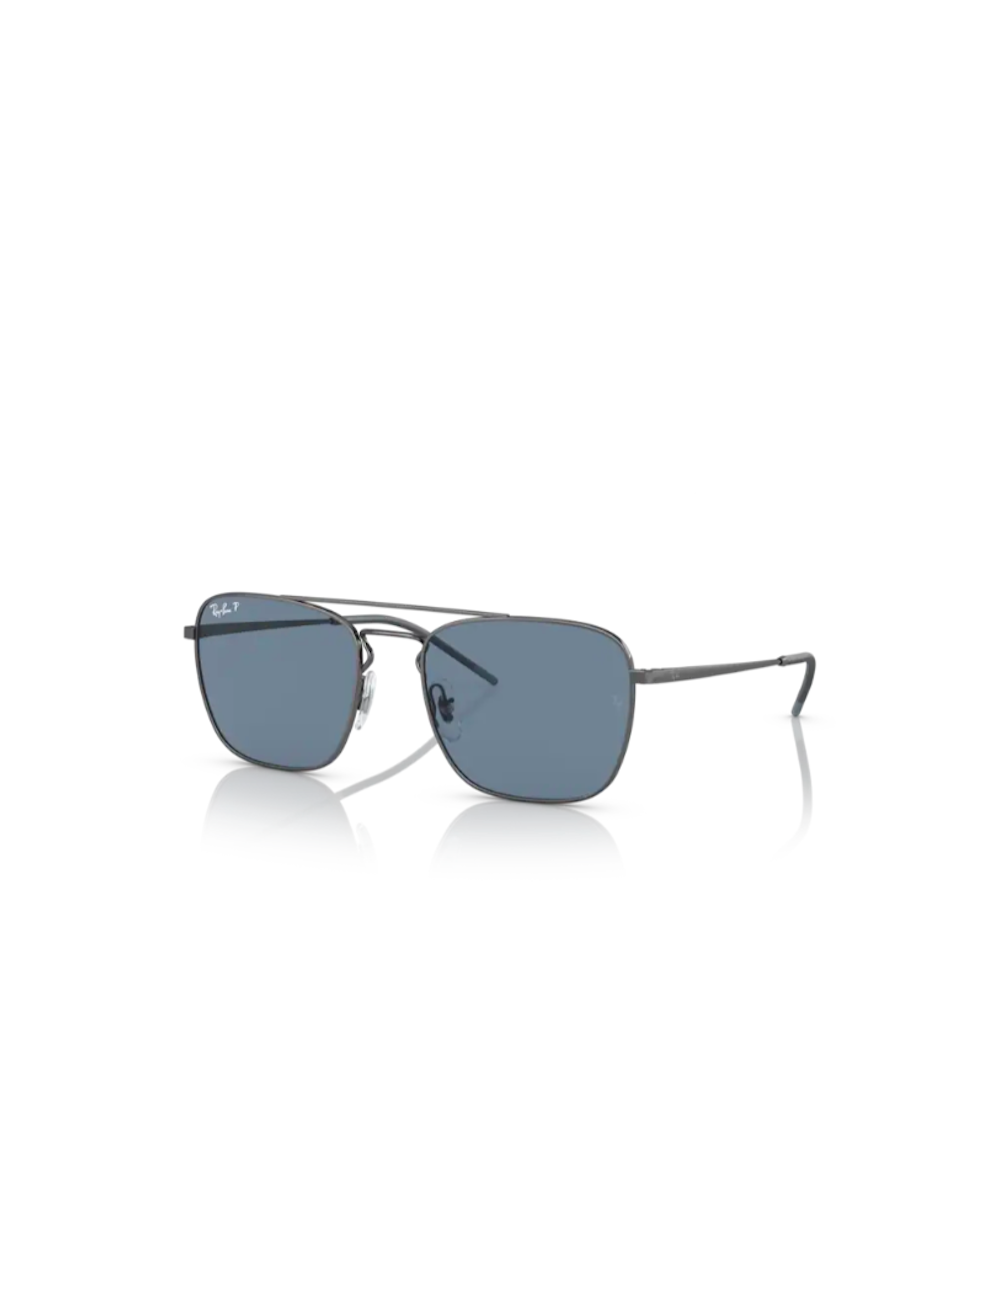 Ray Ban RB3588 92492V polarized sunglasses – Ottica Mauro